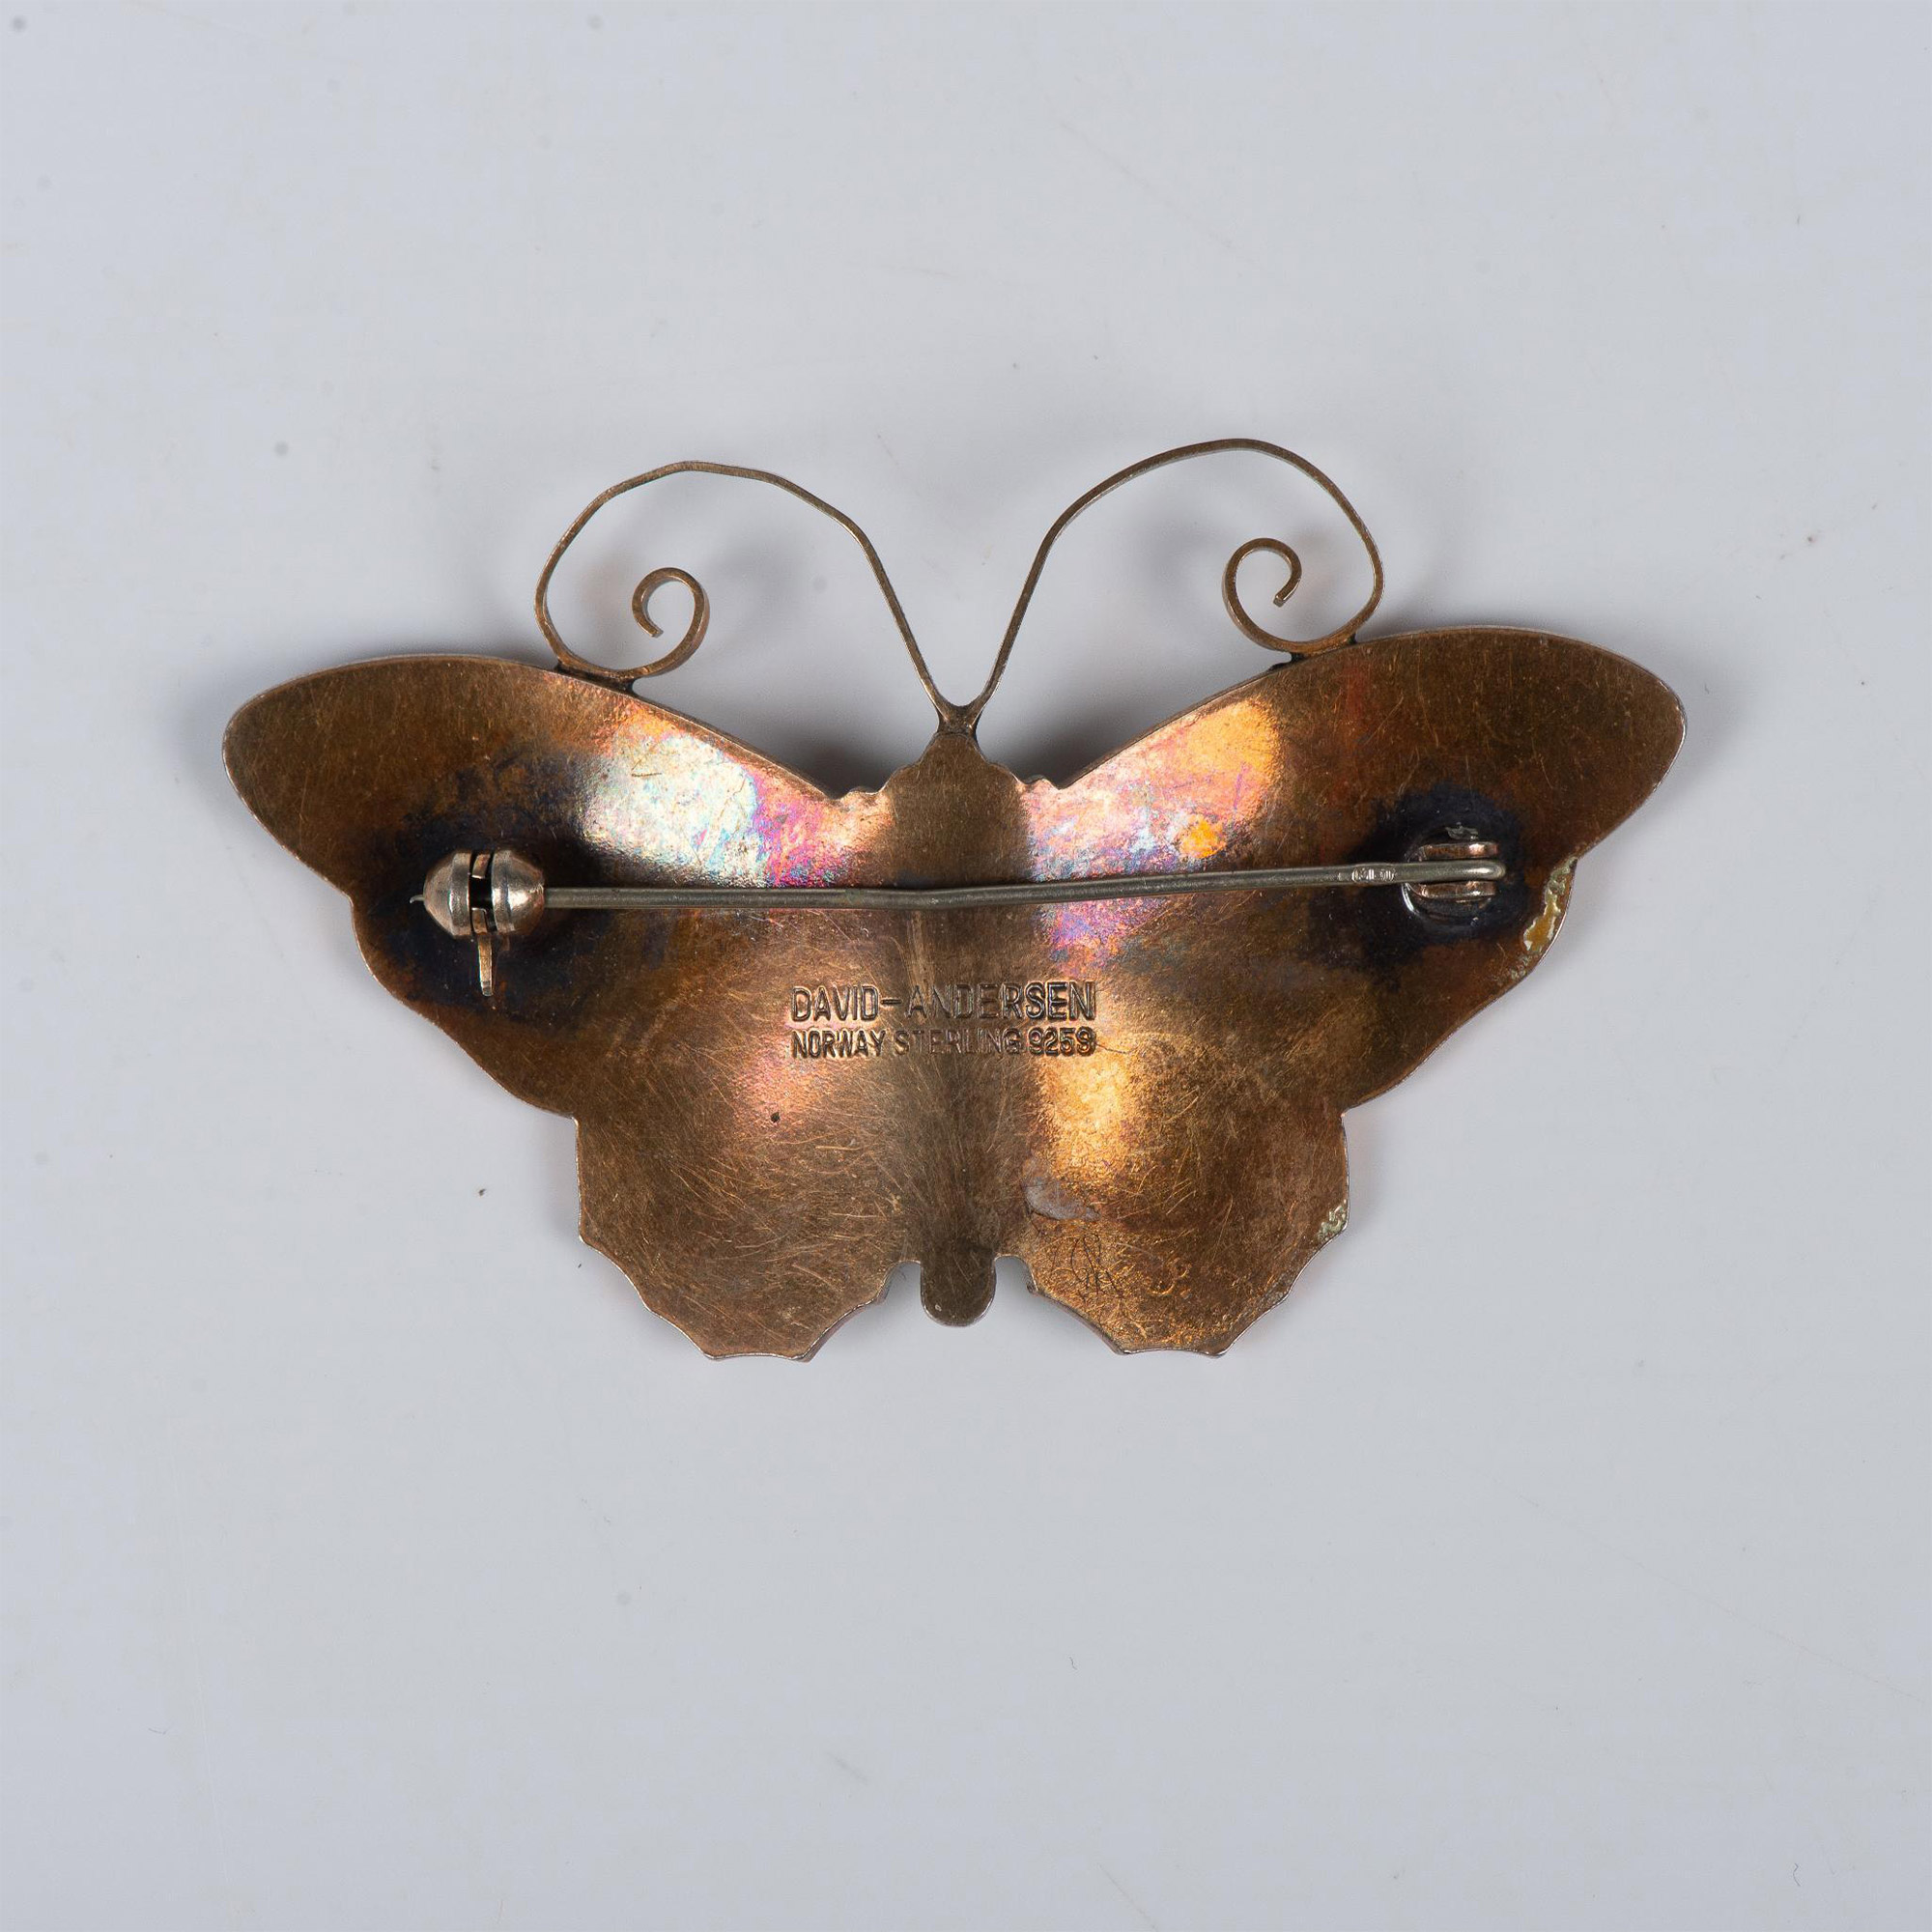 David Andersen Sterling Silver and Enamel Butterfly Brooch - Image 2 of 4